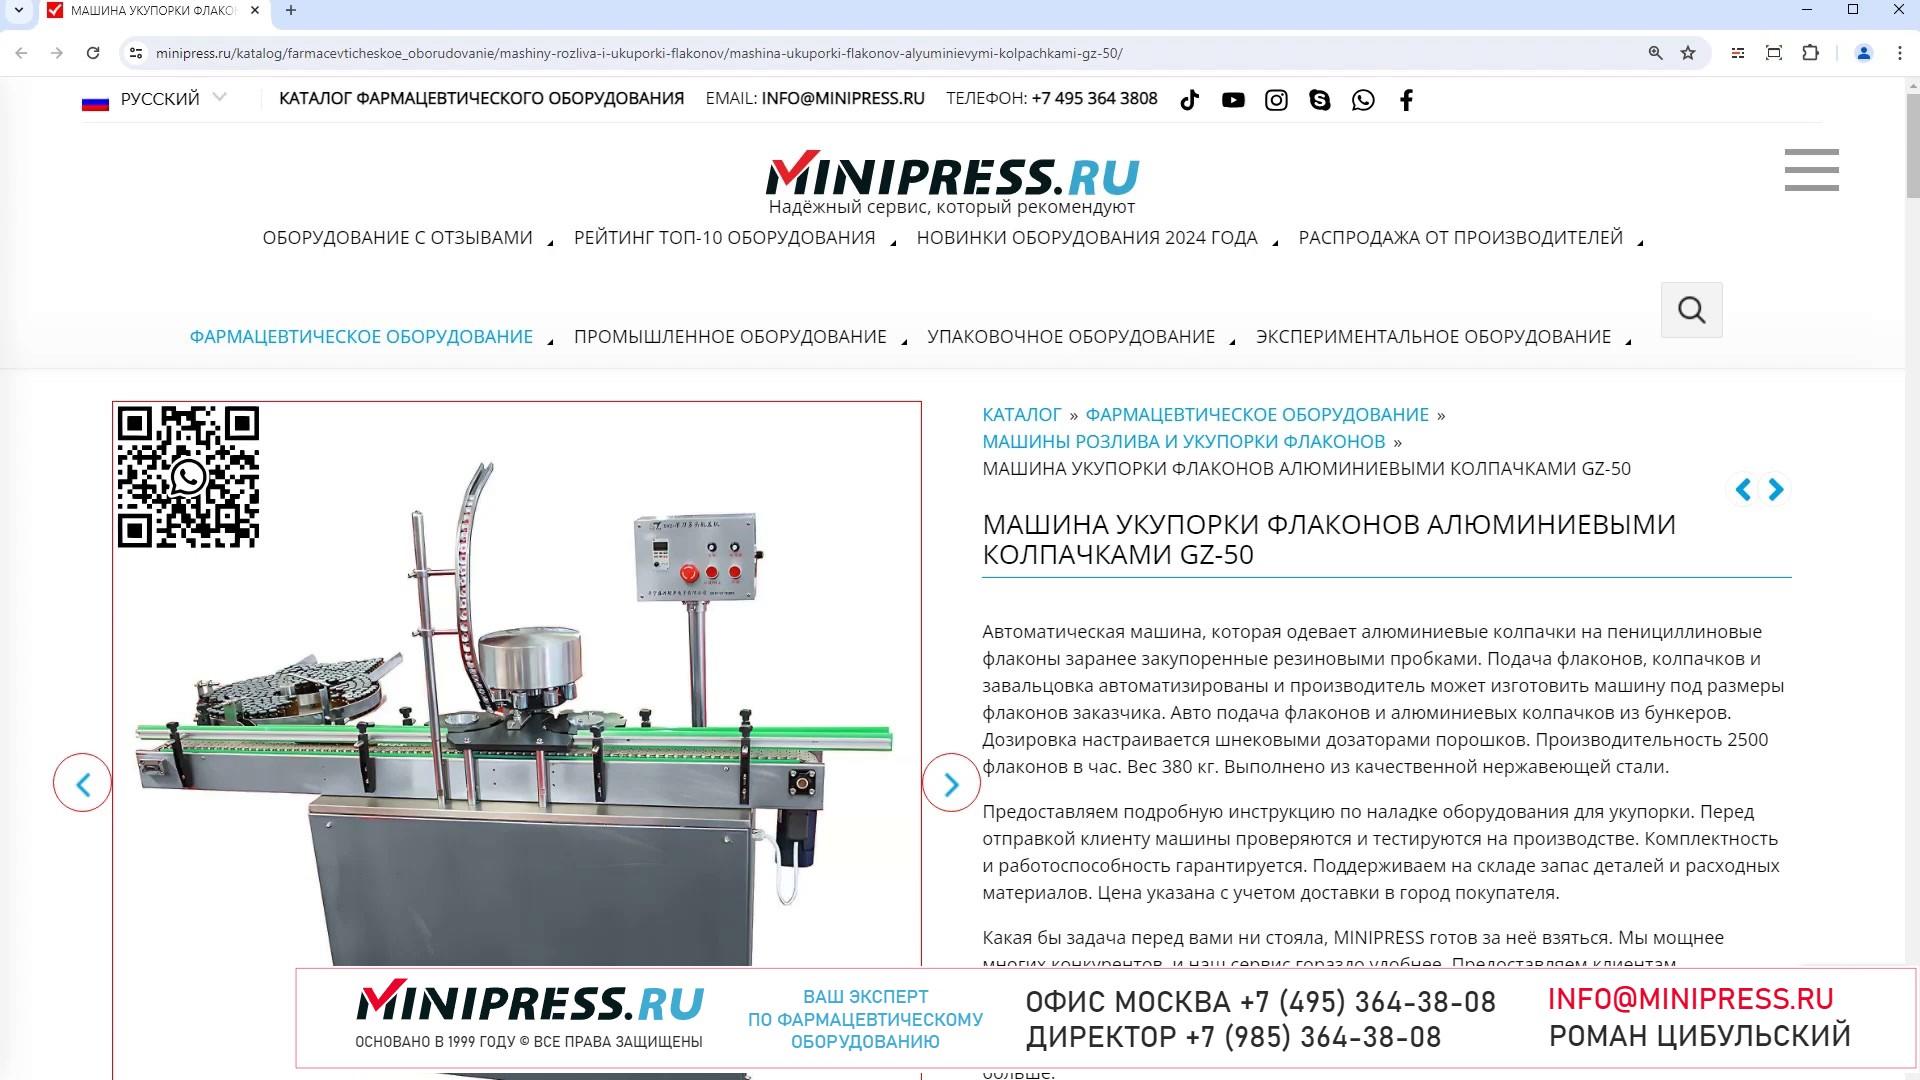 Minipress.ru Машина укупорки флаконов алюминиевыми колпачками GZ-50